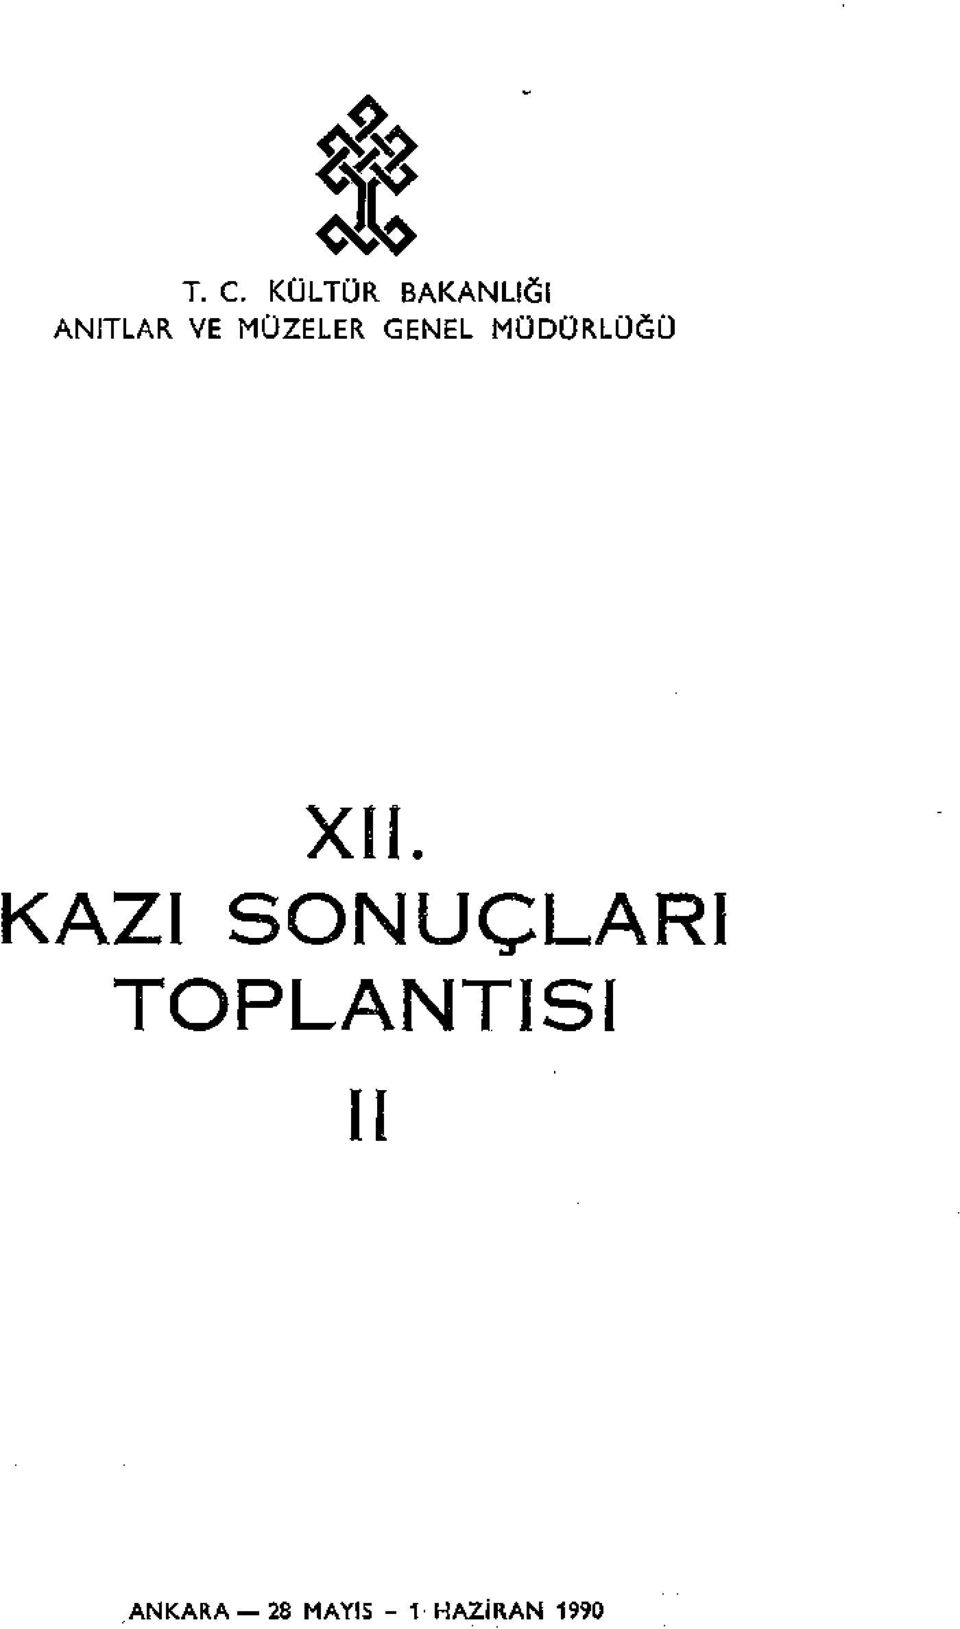 XII. SONUÇLARI TOPLANTISI II